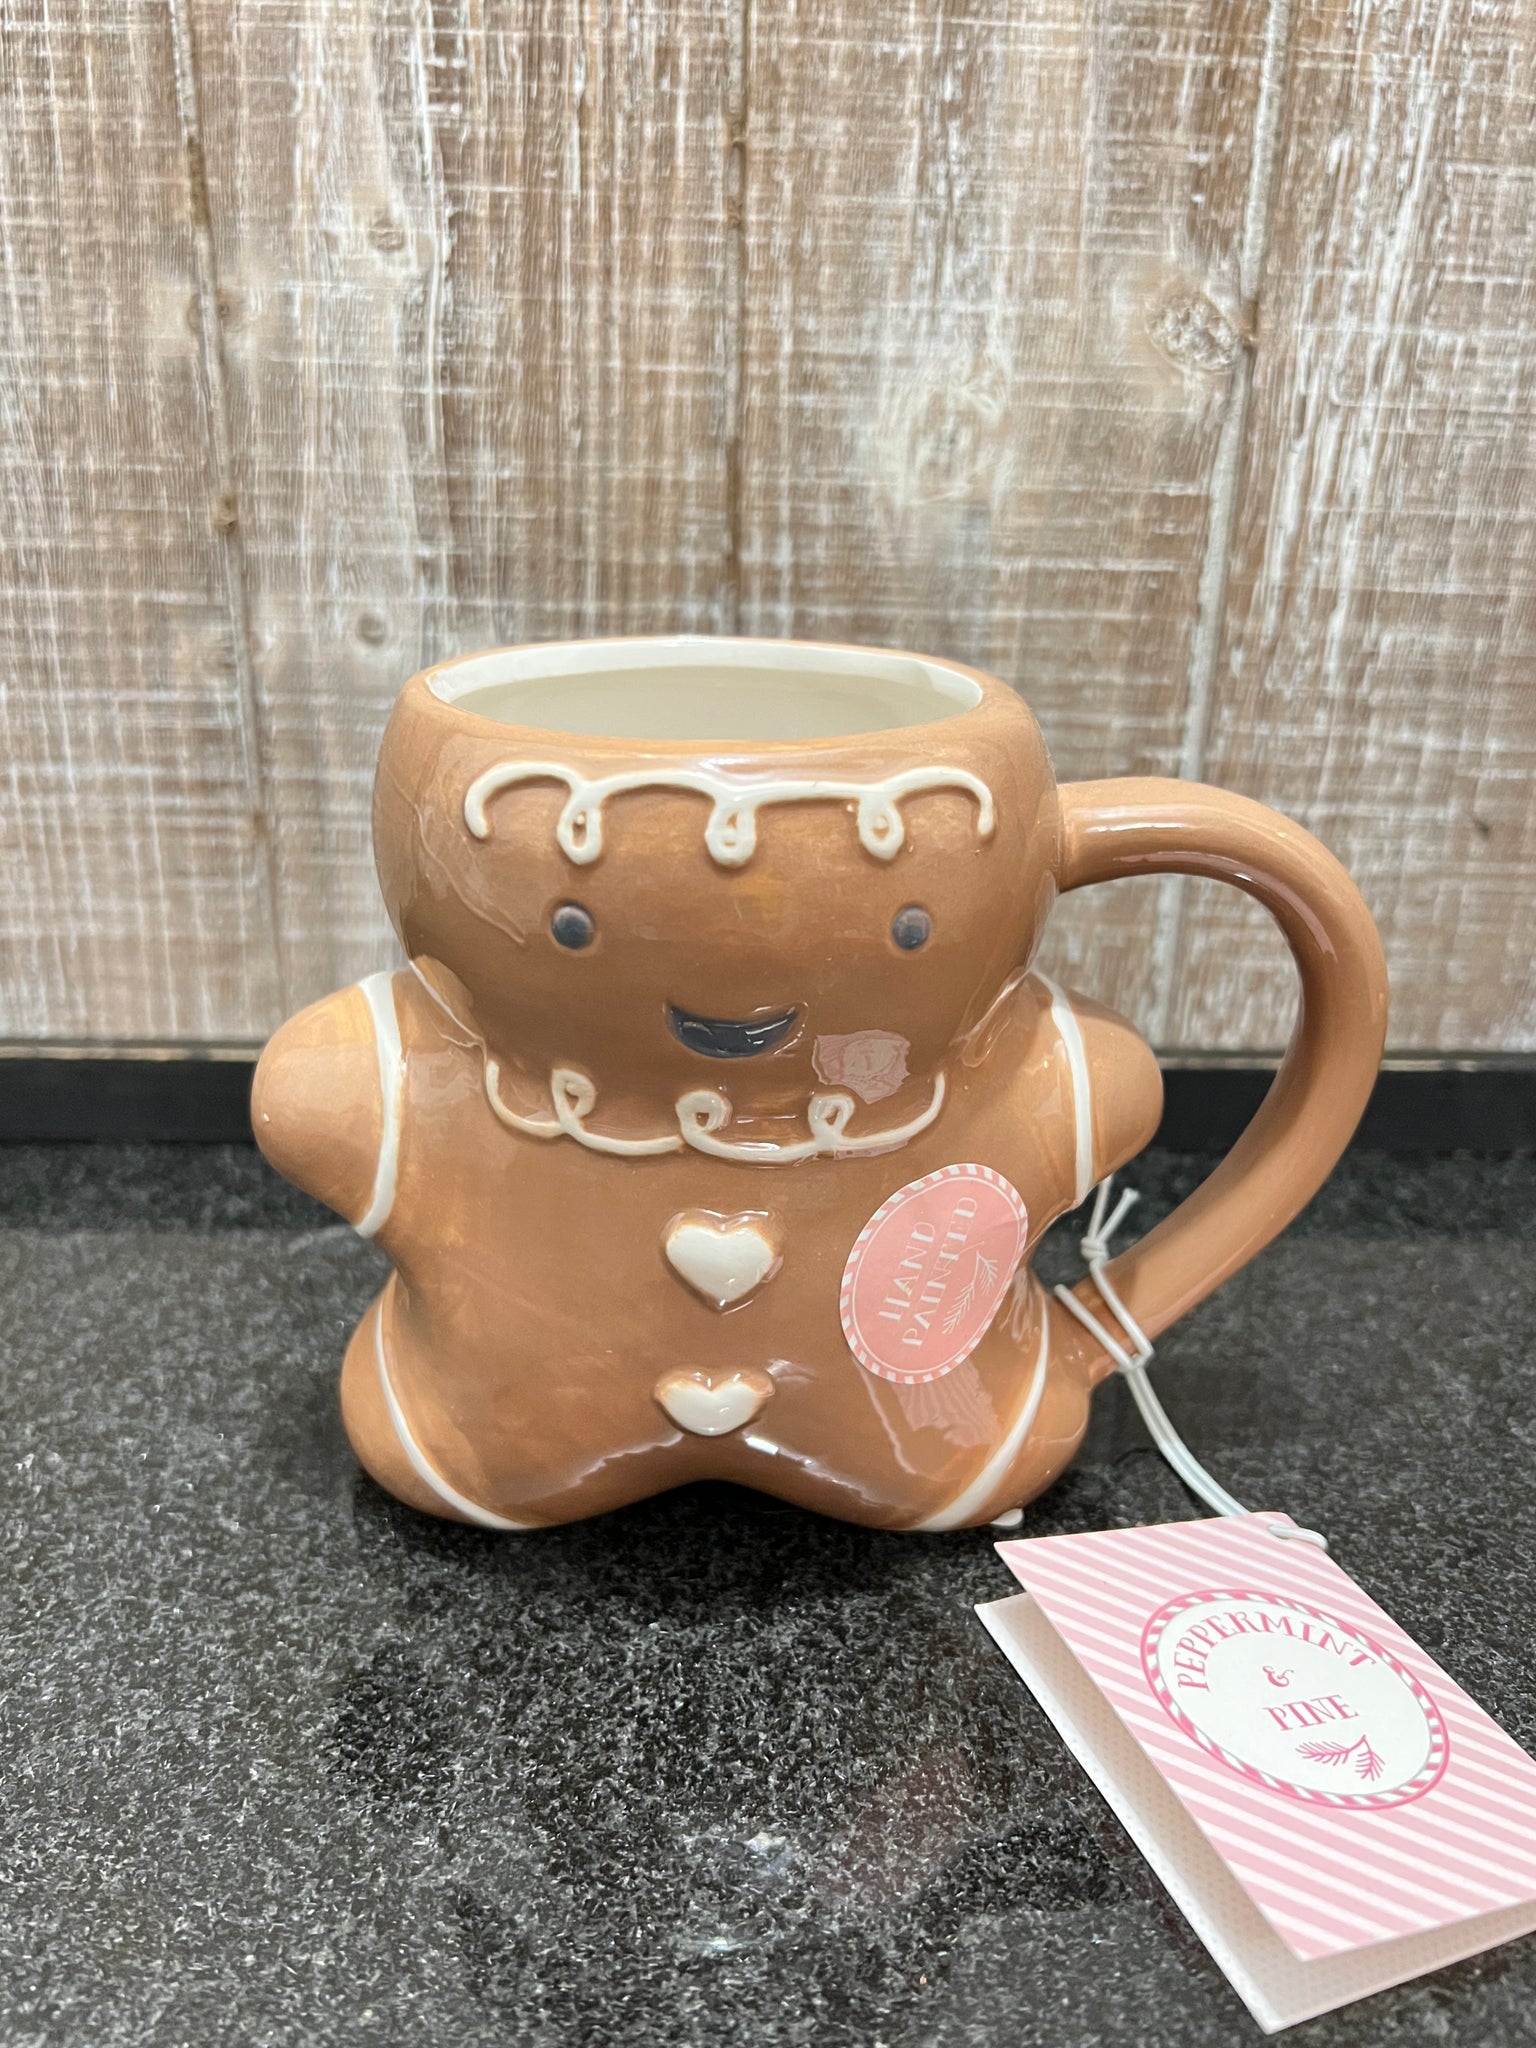 Angry Gingerbread Man Molded Coffee Mug - 13.5 oz. - Spencer's